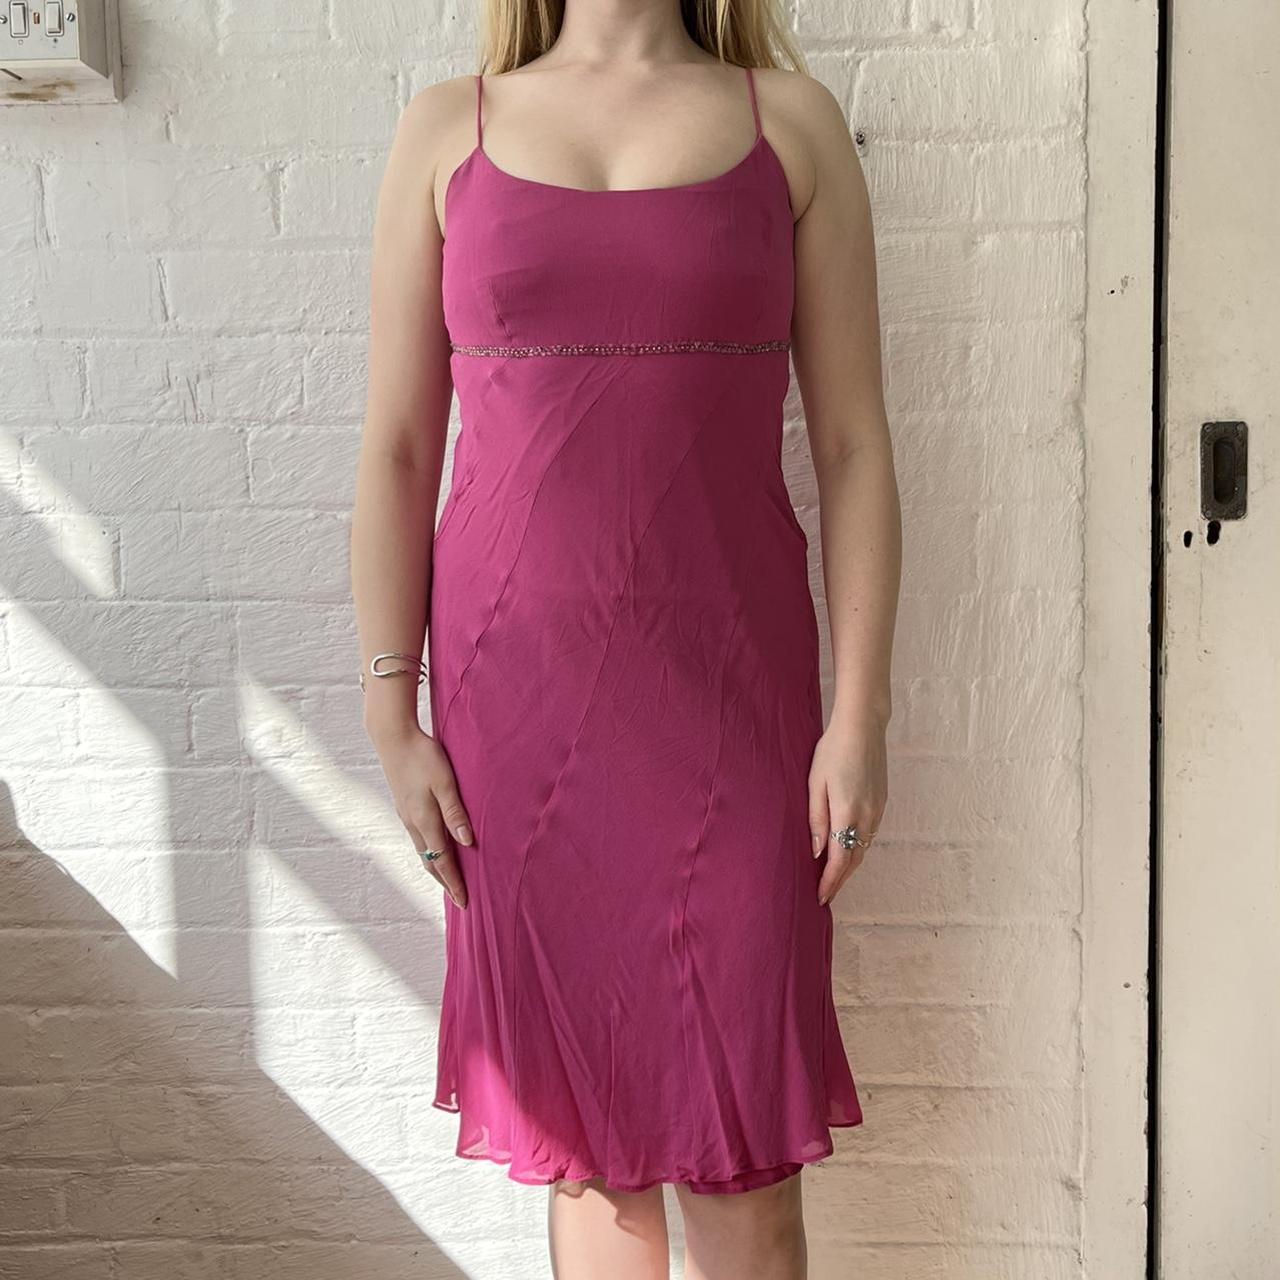 90s Pink Slip Dress 👛 True 90s hot pink bias cut... - Depop